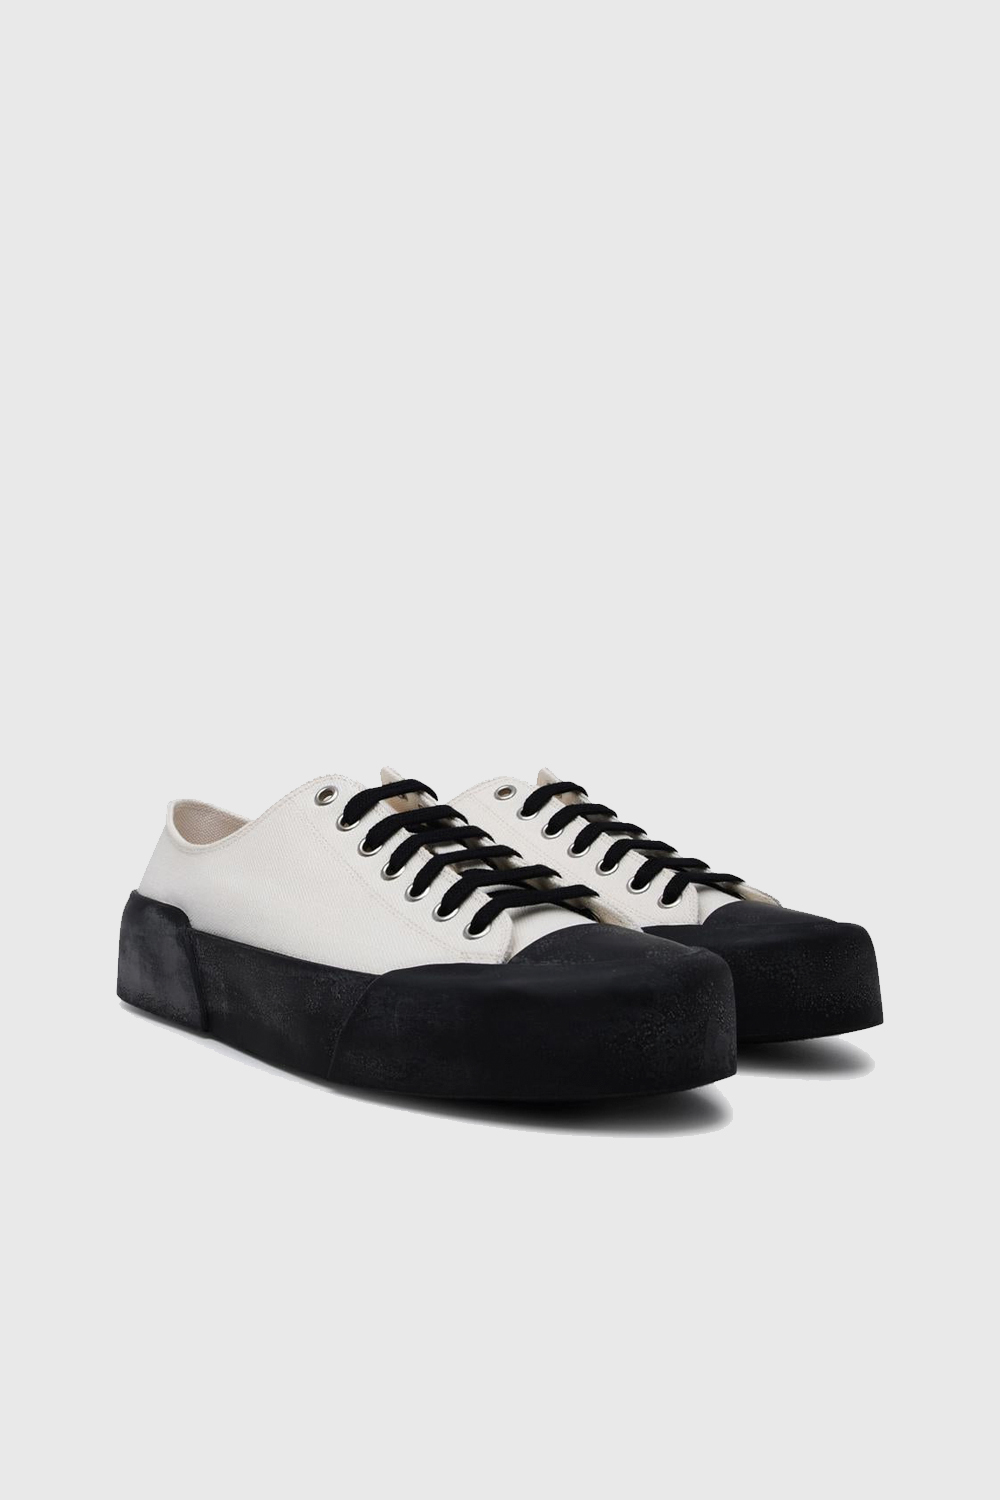 Jil Sander Canvas LaceUp Low Cut Sneakers Black/white | WoodWood.com